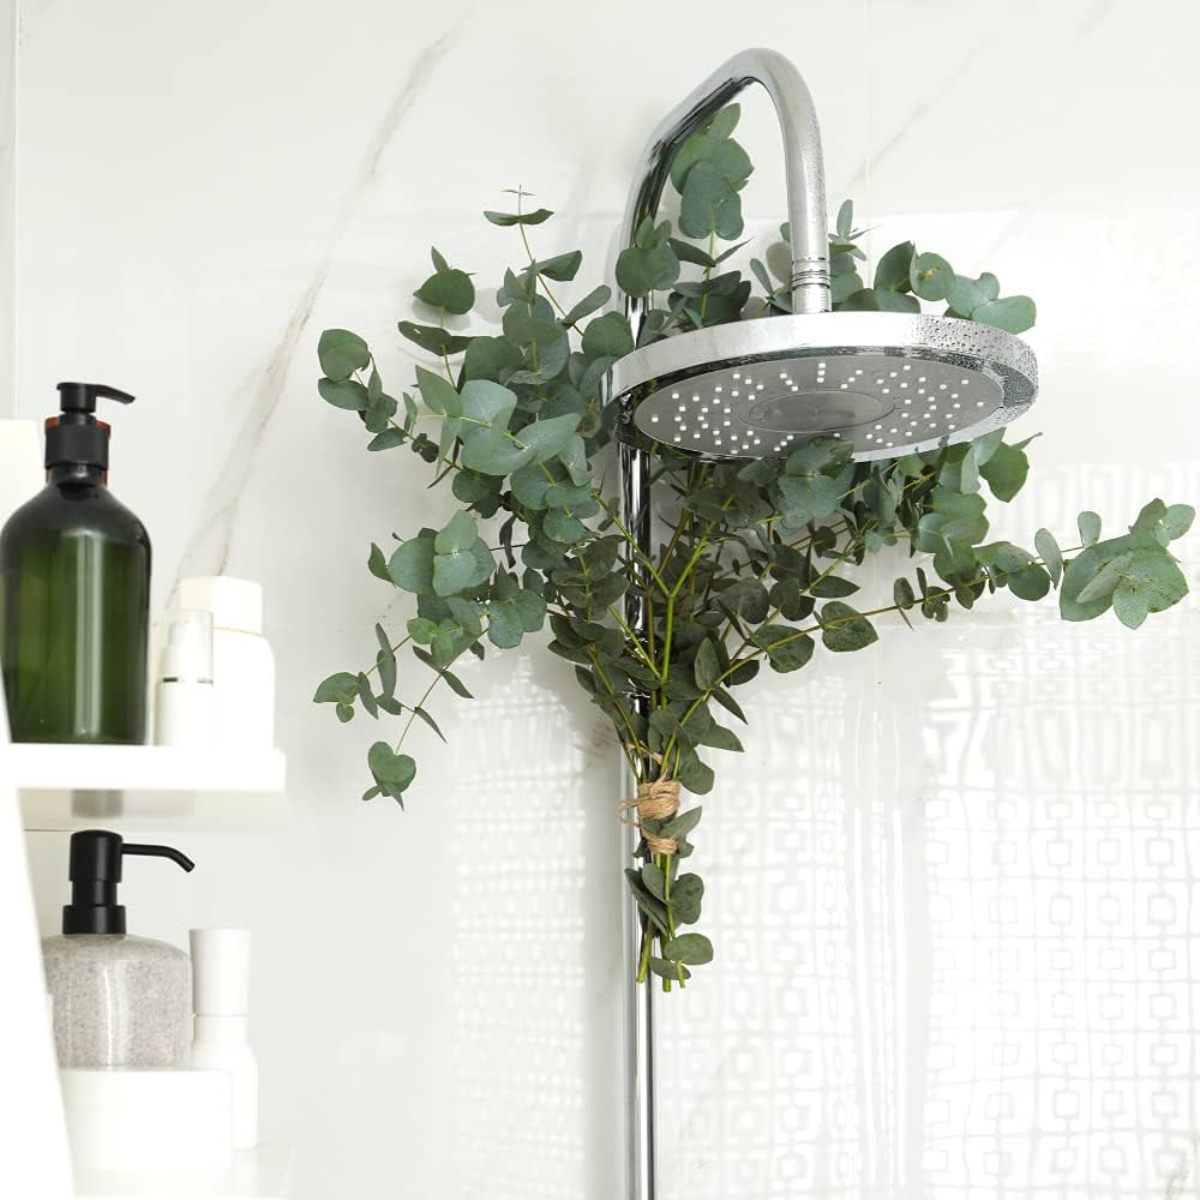 eucalyptus plant on shower head